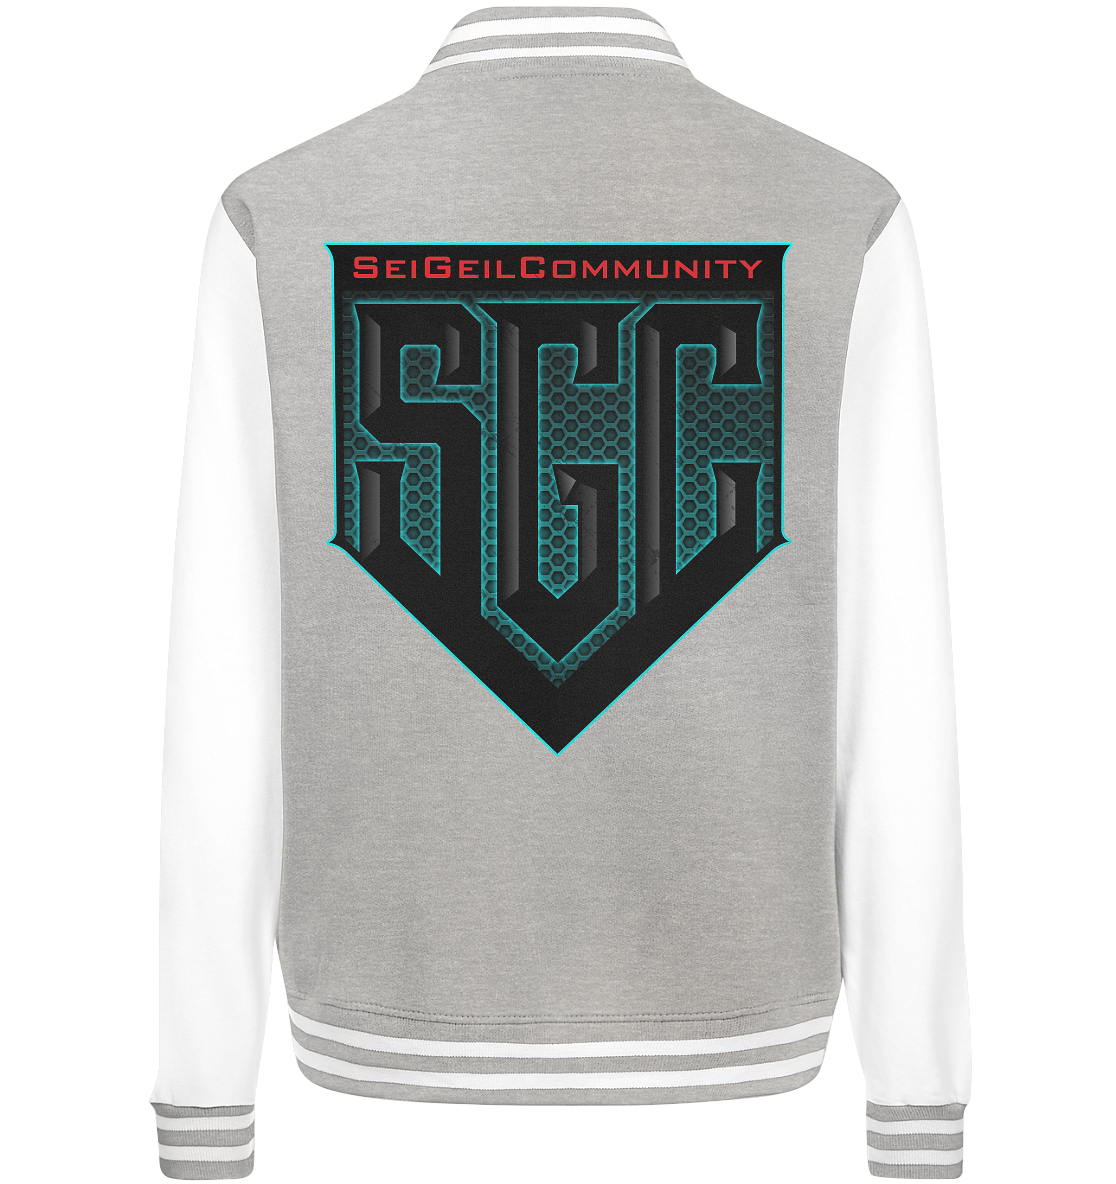 SEI GEIL COMMUNITY - Basic College Jacke